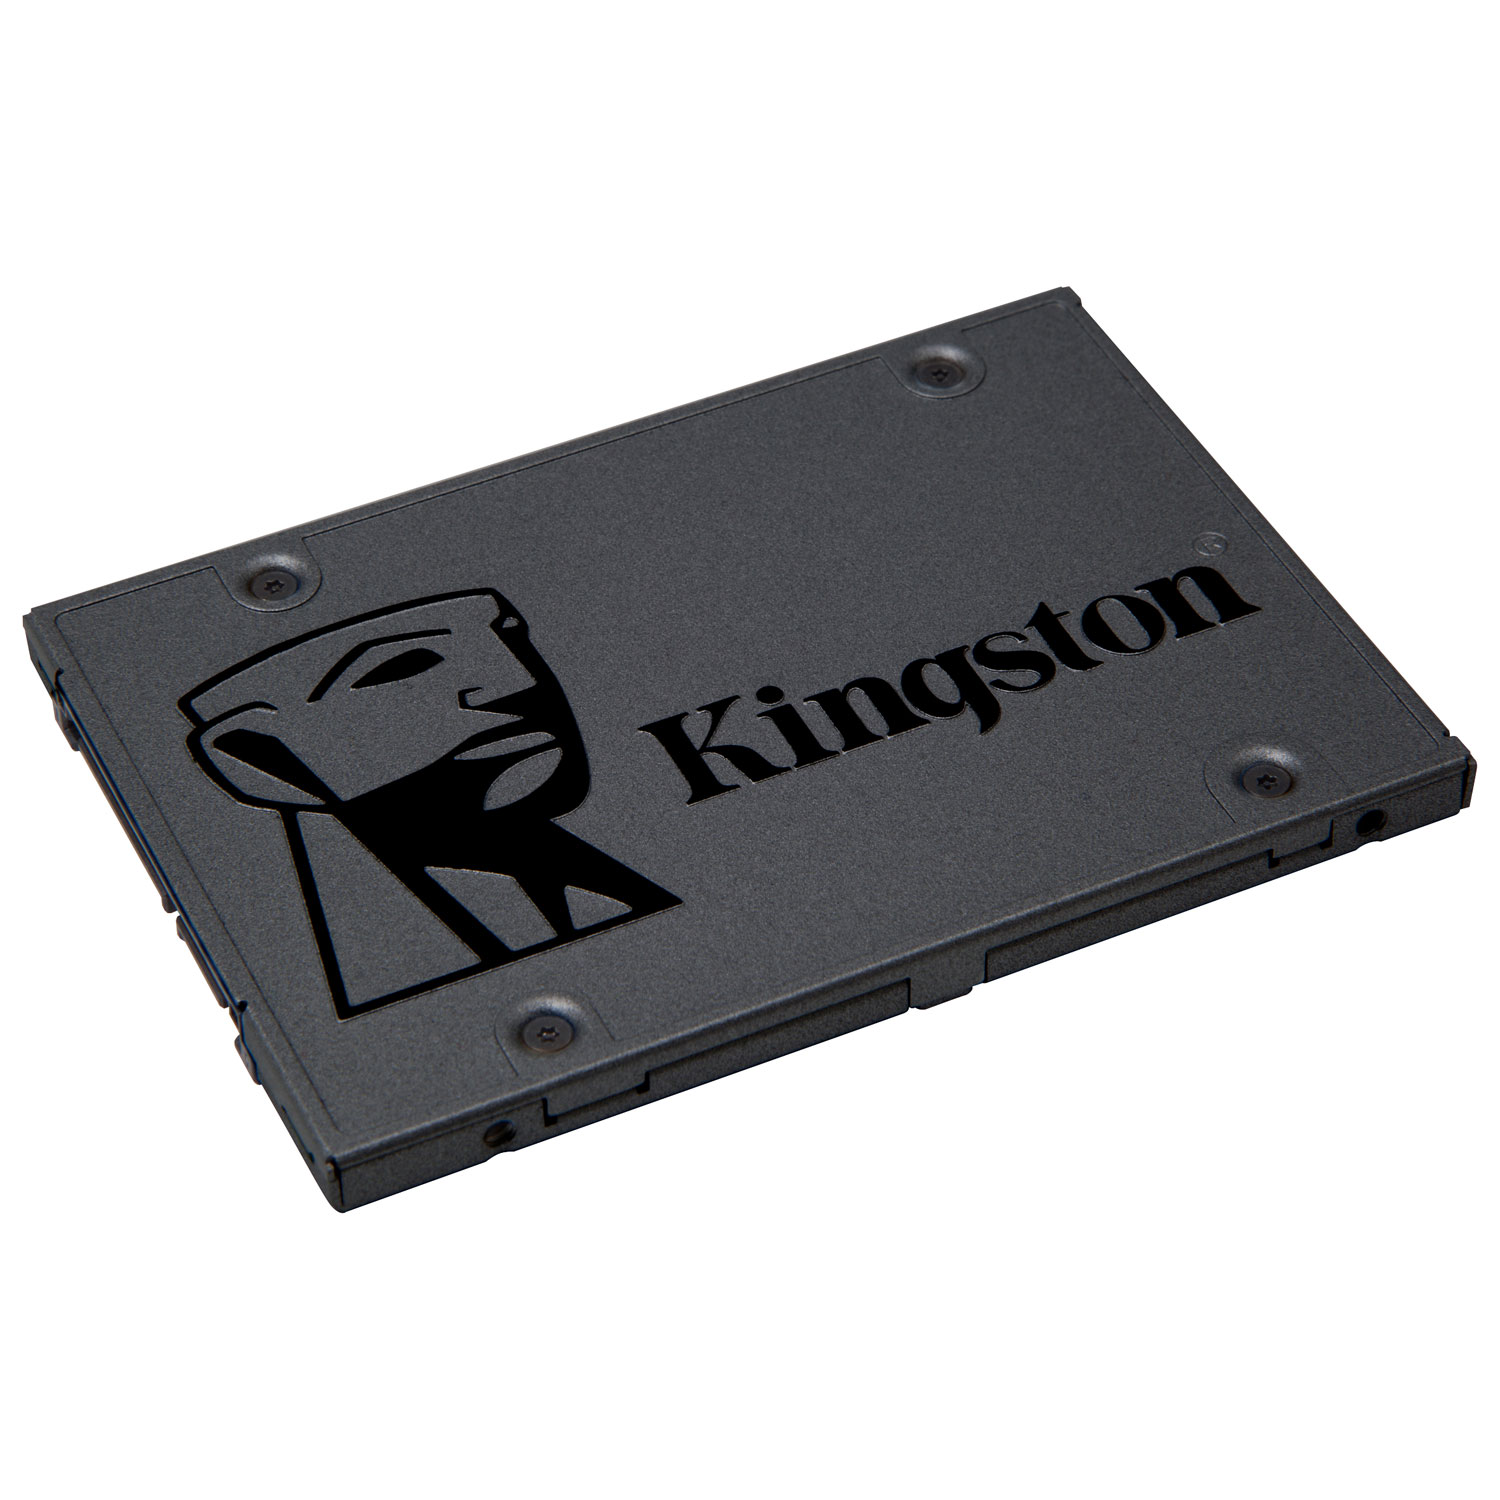 Kingston Technology 480GB SATA III Internal Solid State Drive (SA400S37/480G)